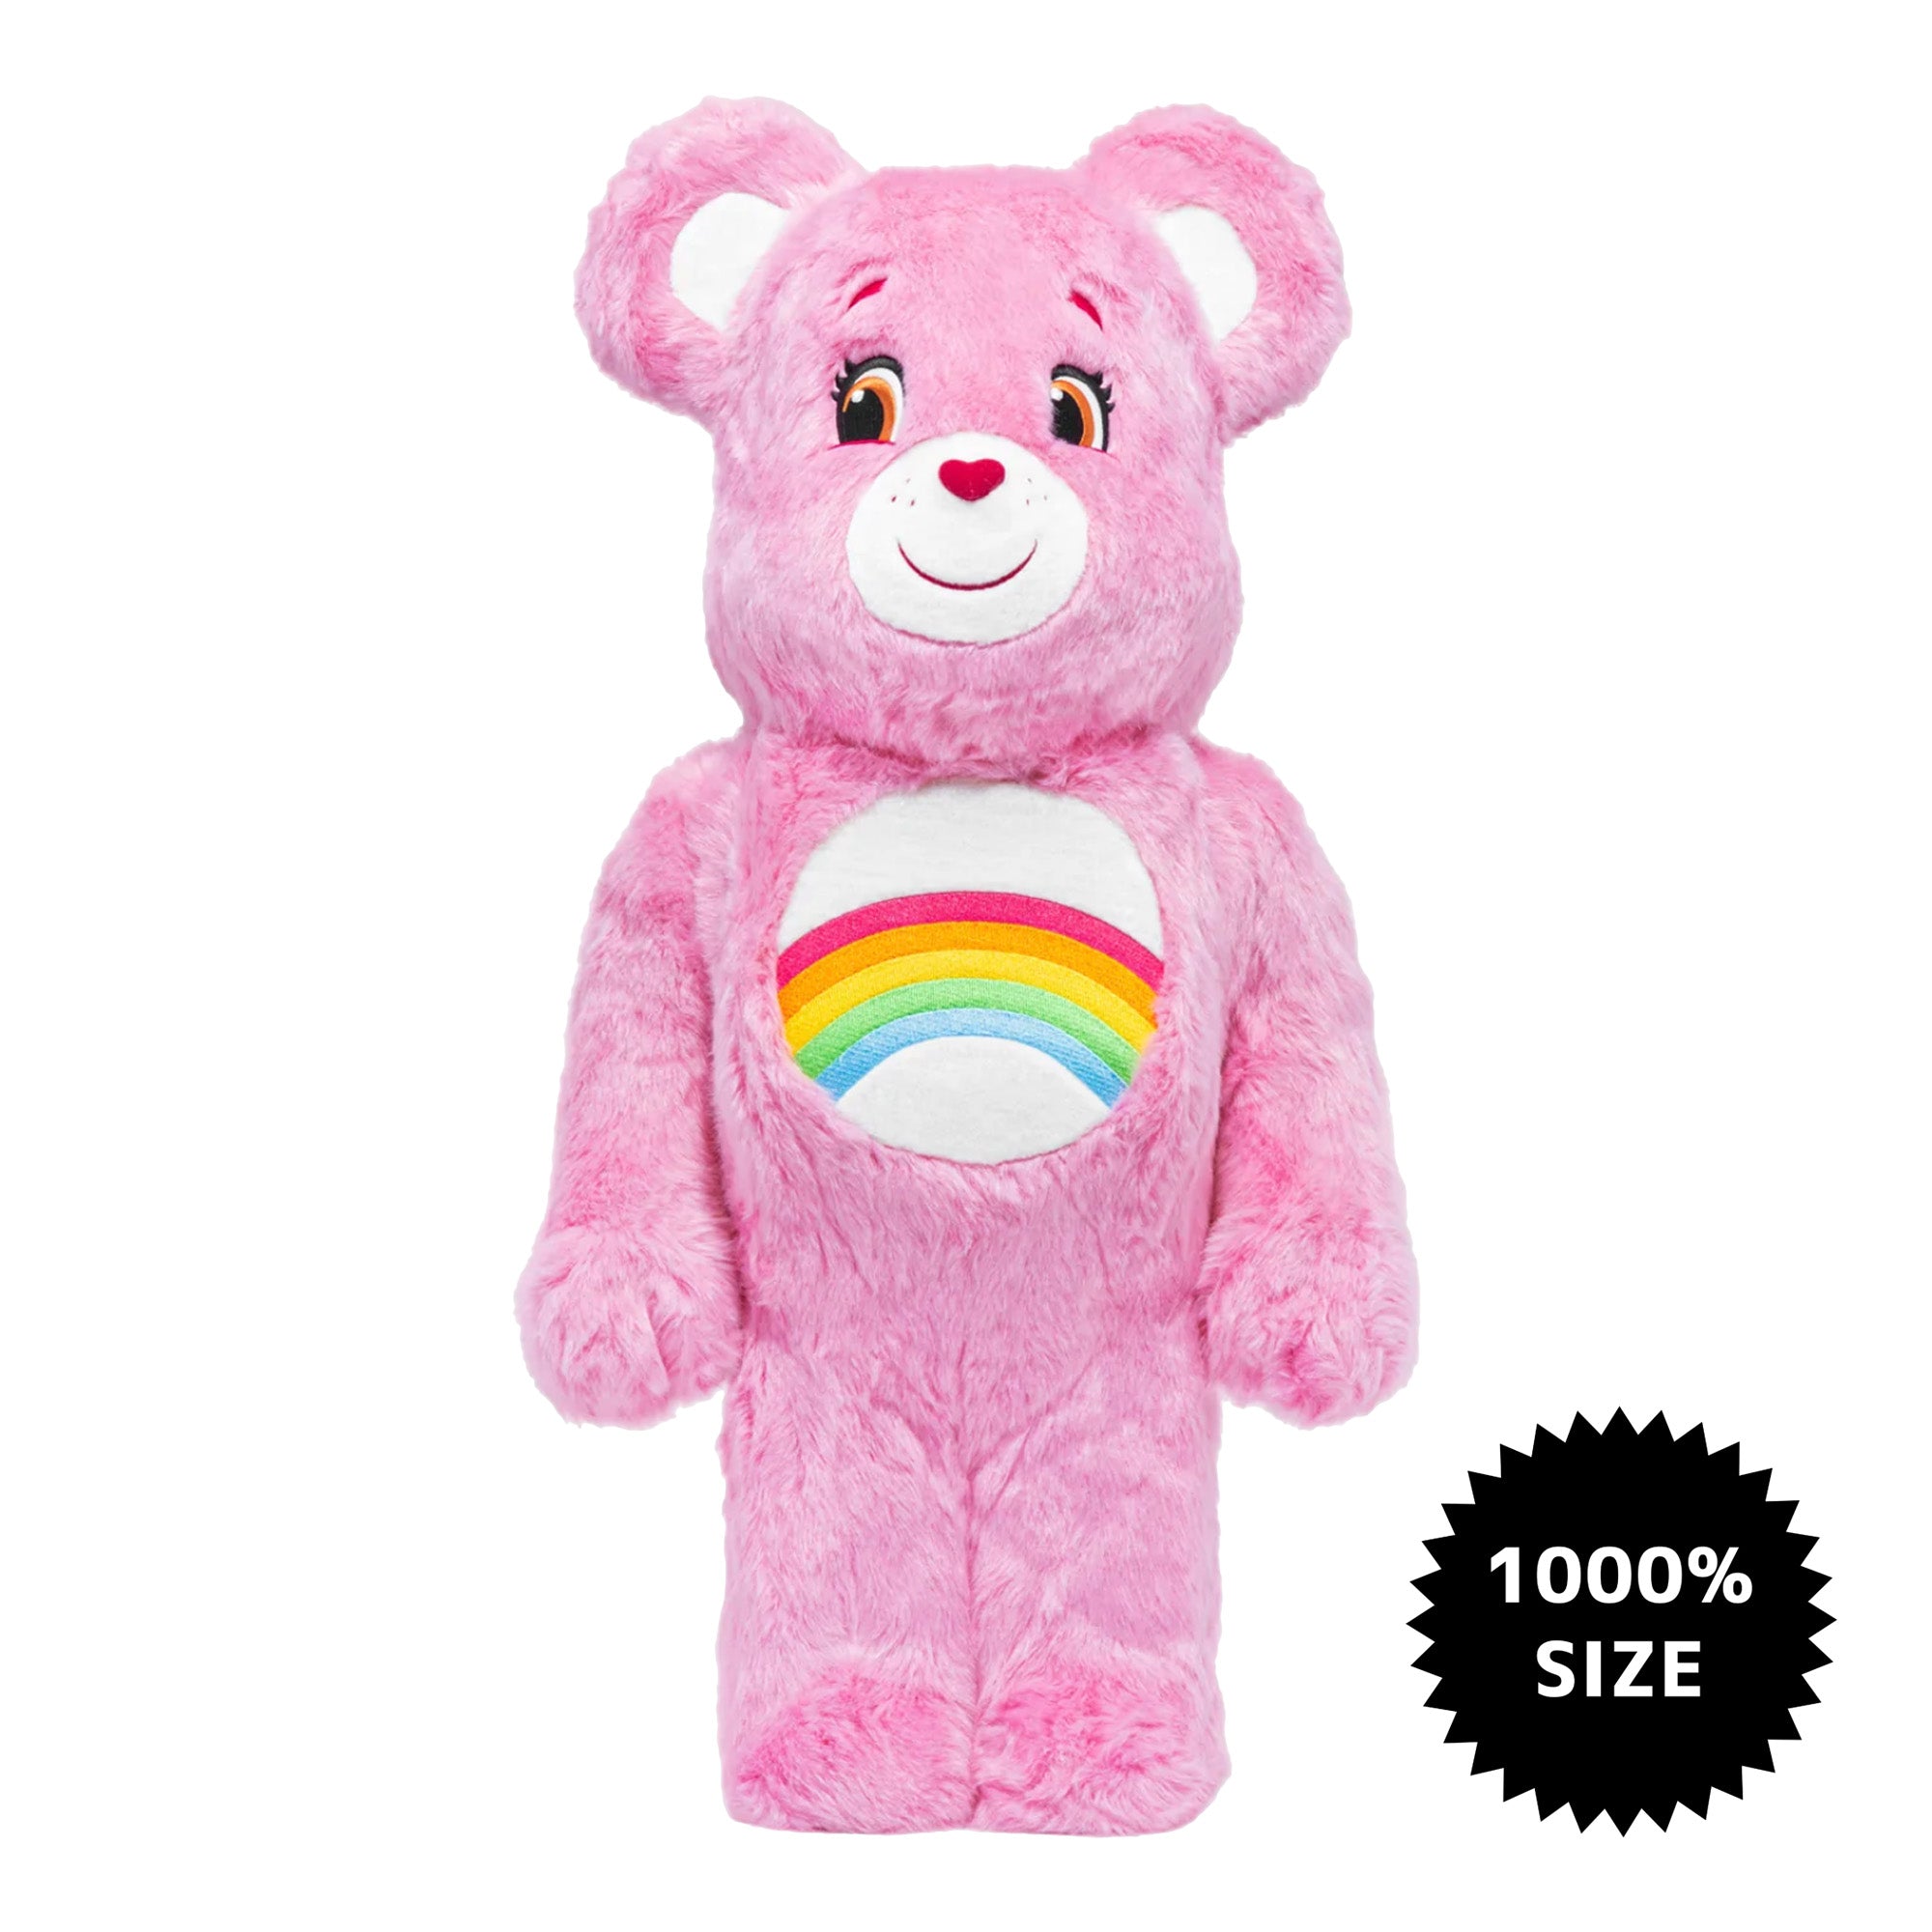 Bearbrick x Care Bears Cheer Bear Costume Ver. 1000% Pink